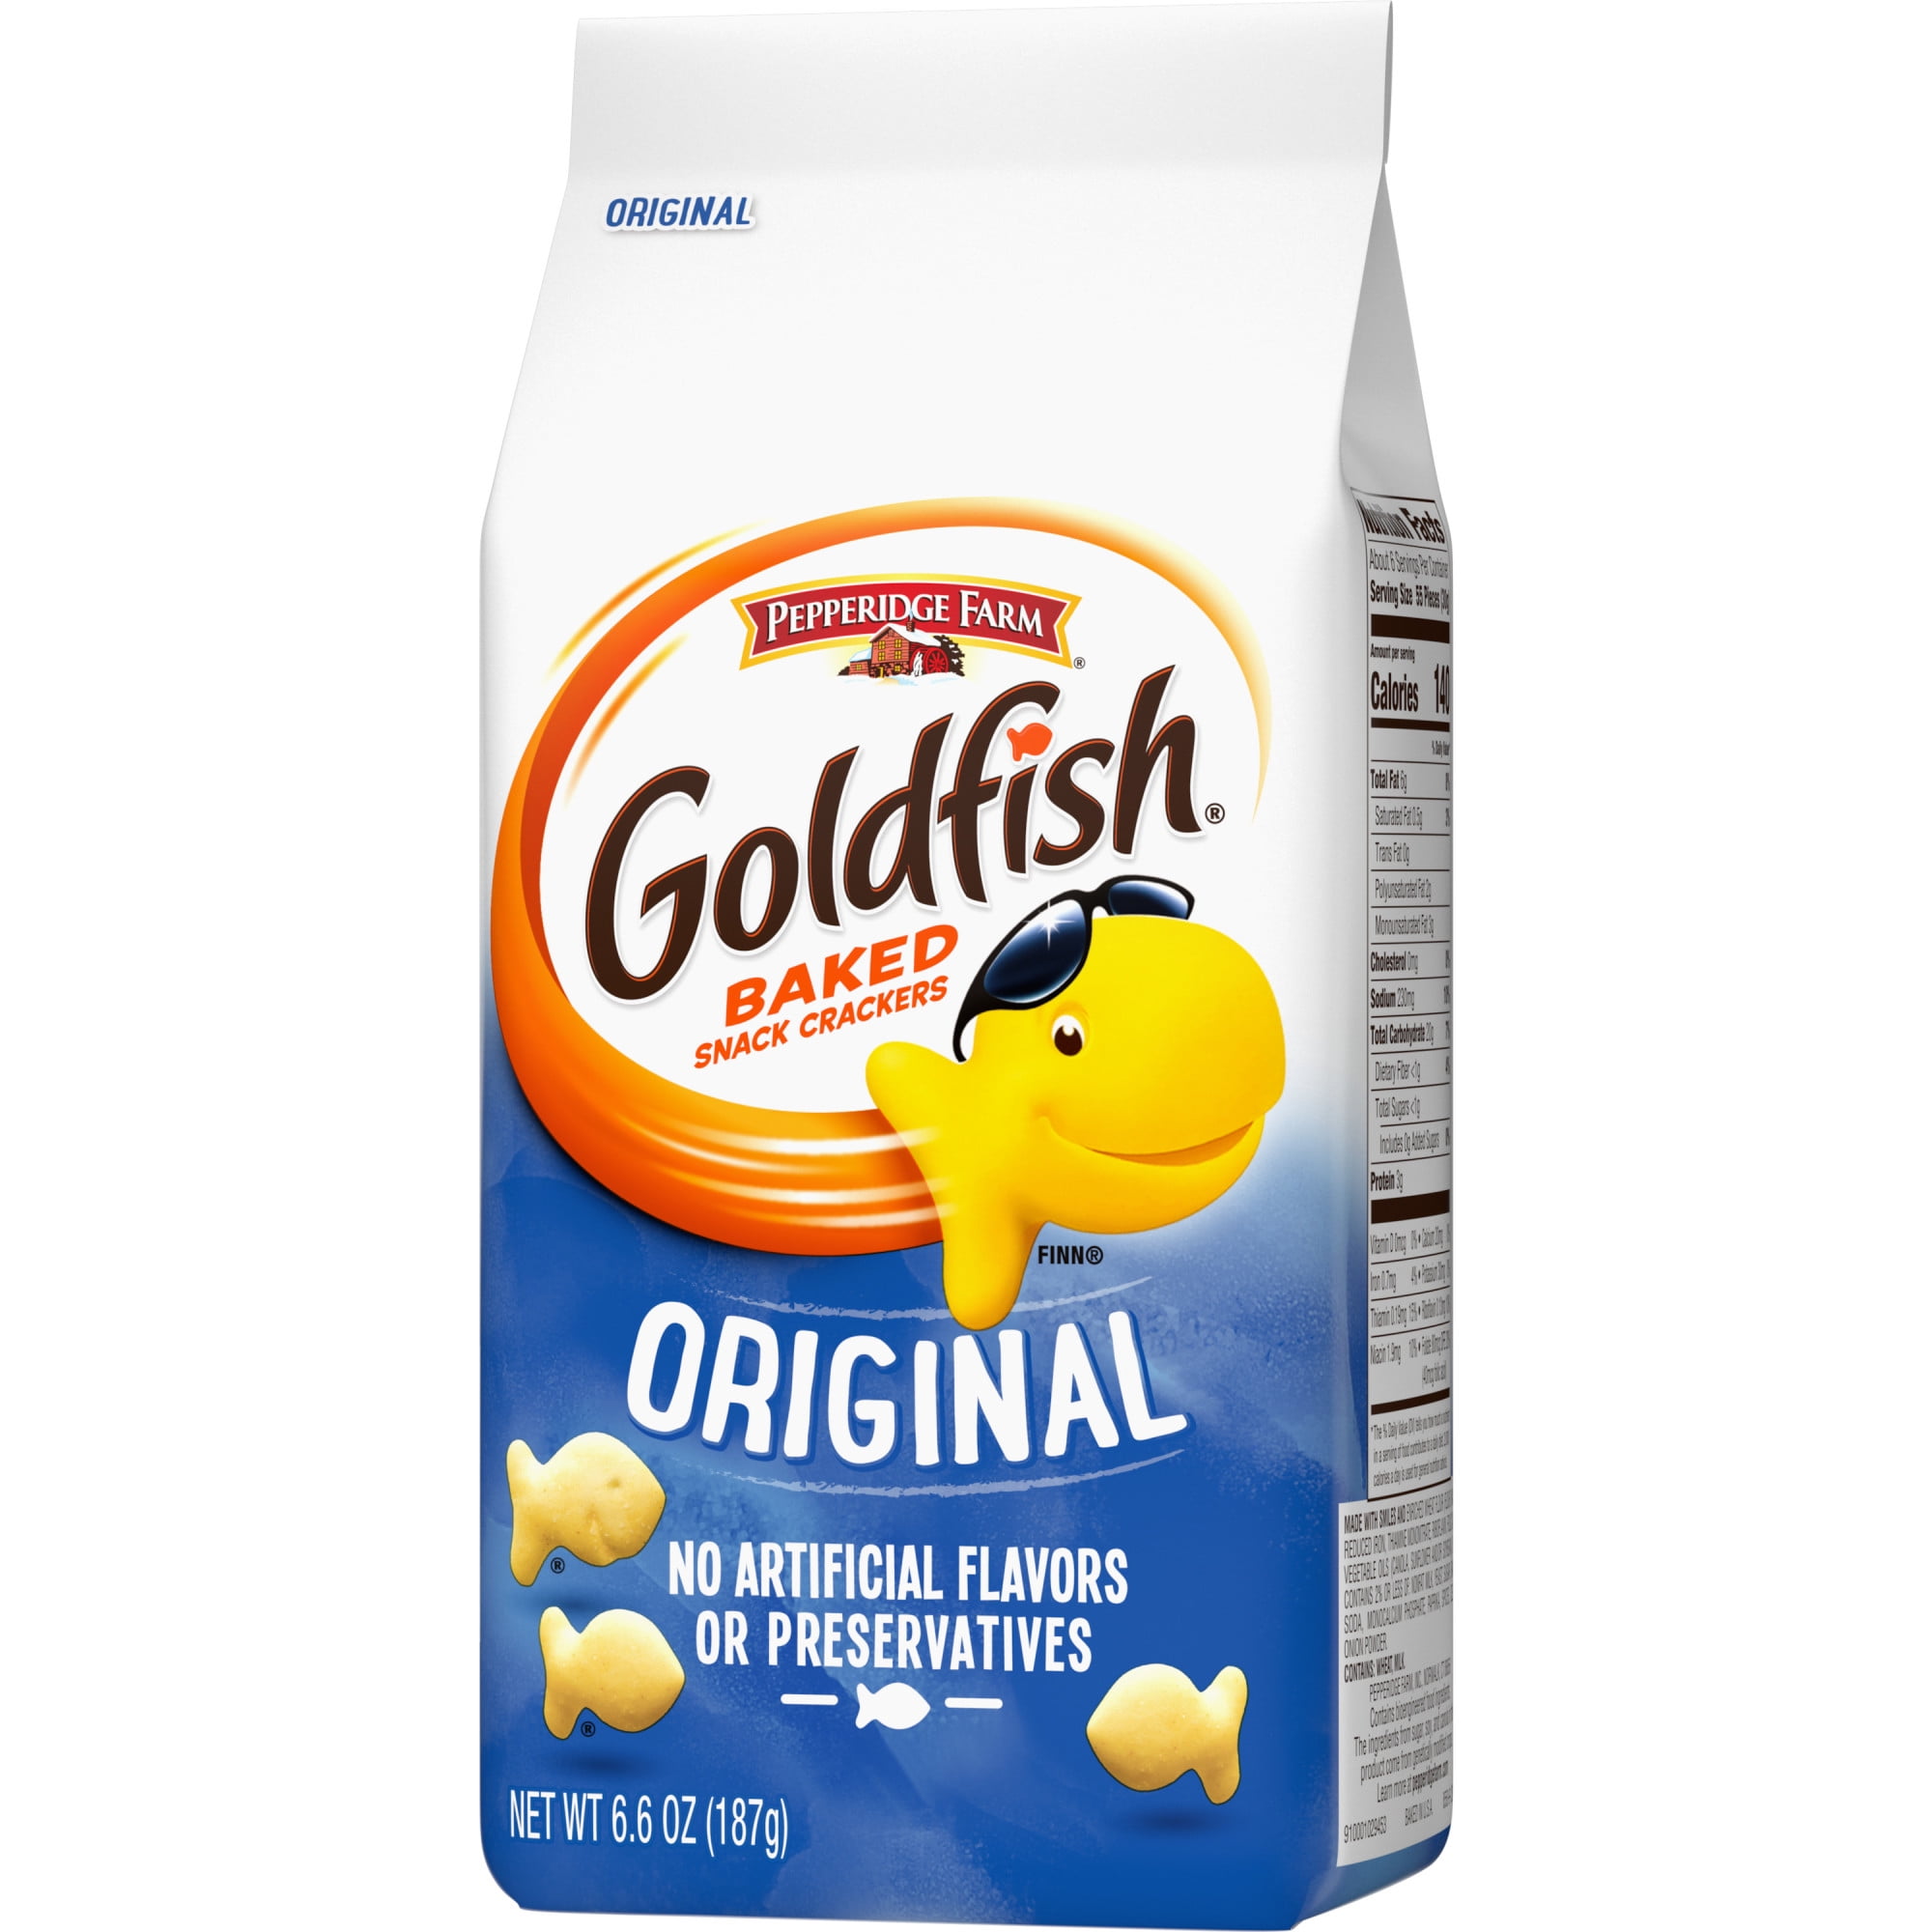 Goldfish Original Crackers, Snack Crackers, 6.6 oz Bag 